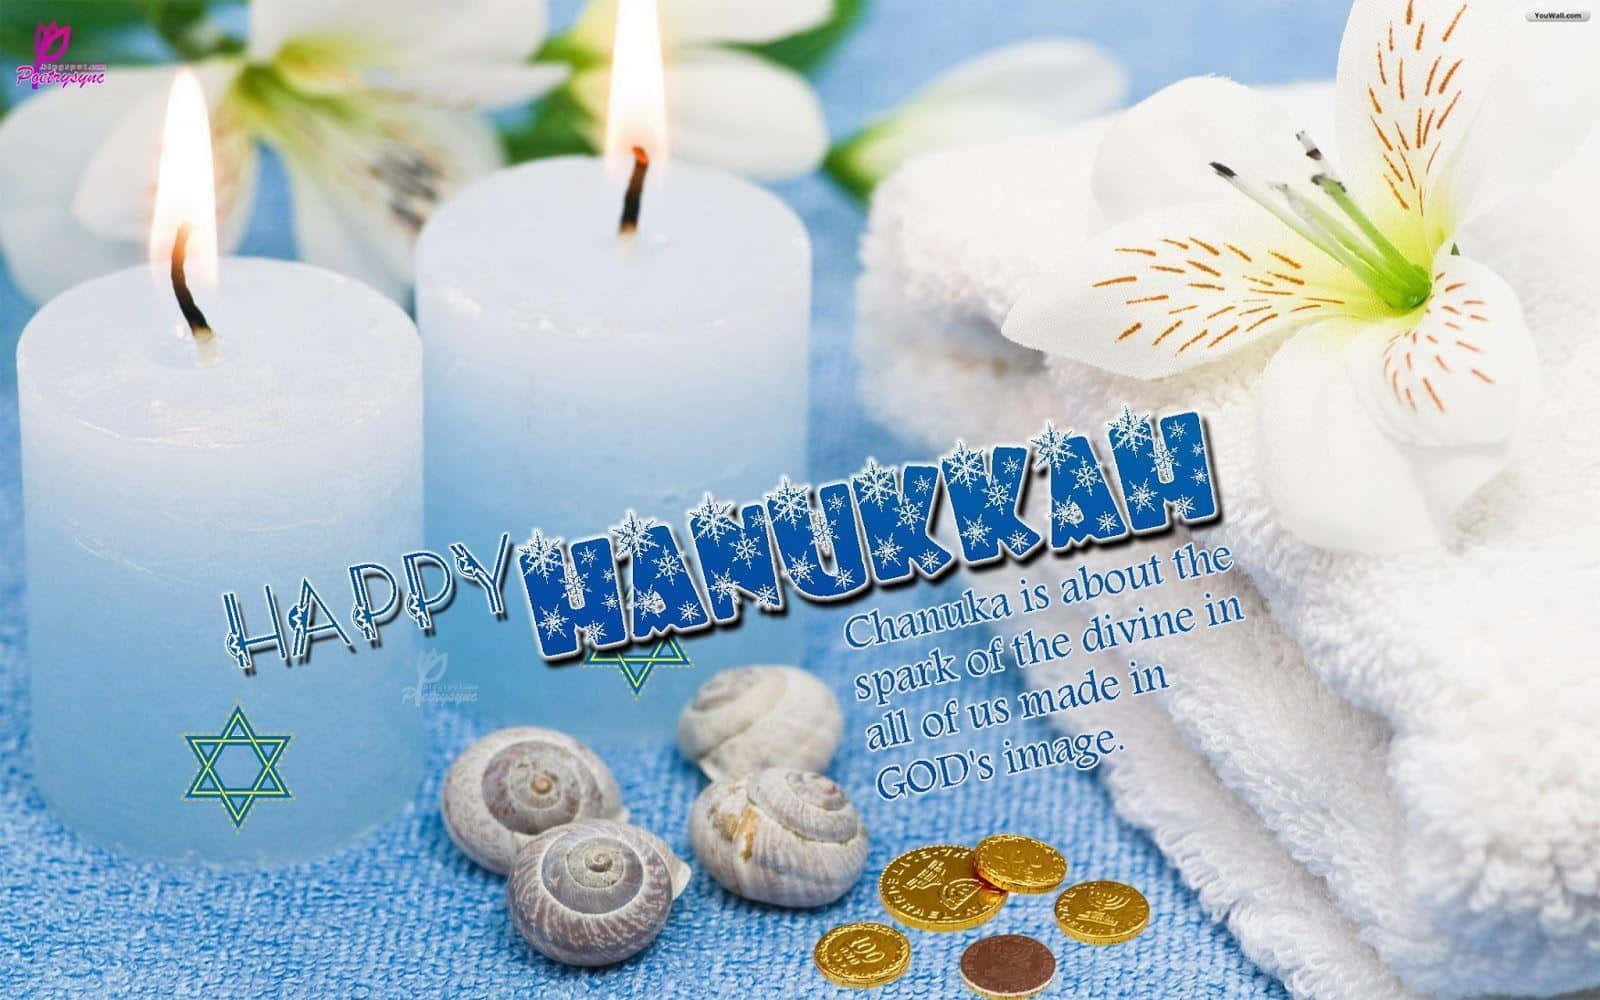 Celebrate Hanukkah with this beautiful blue and white menorah!